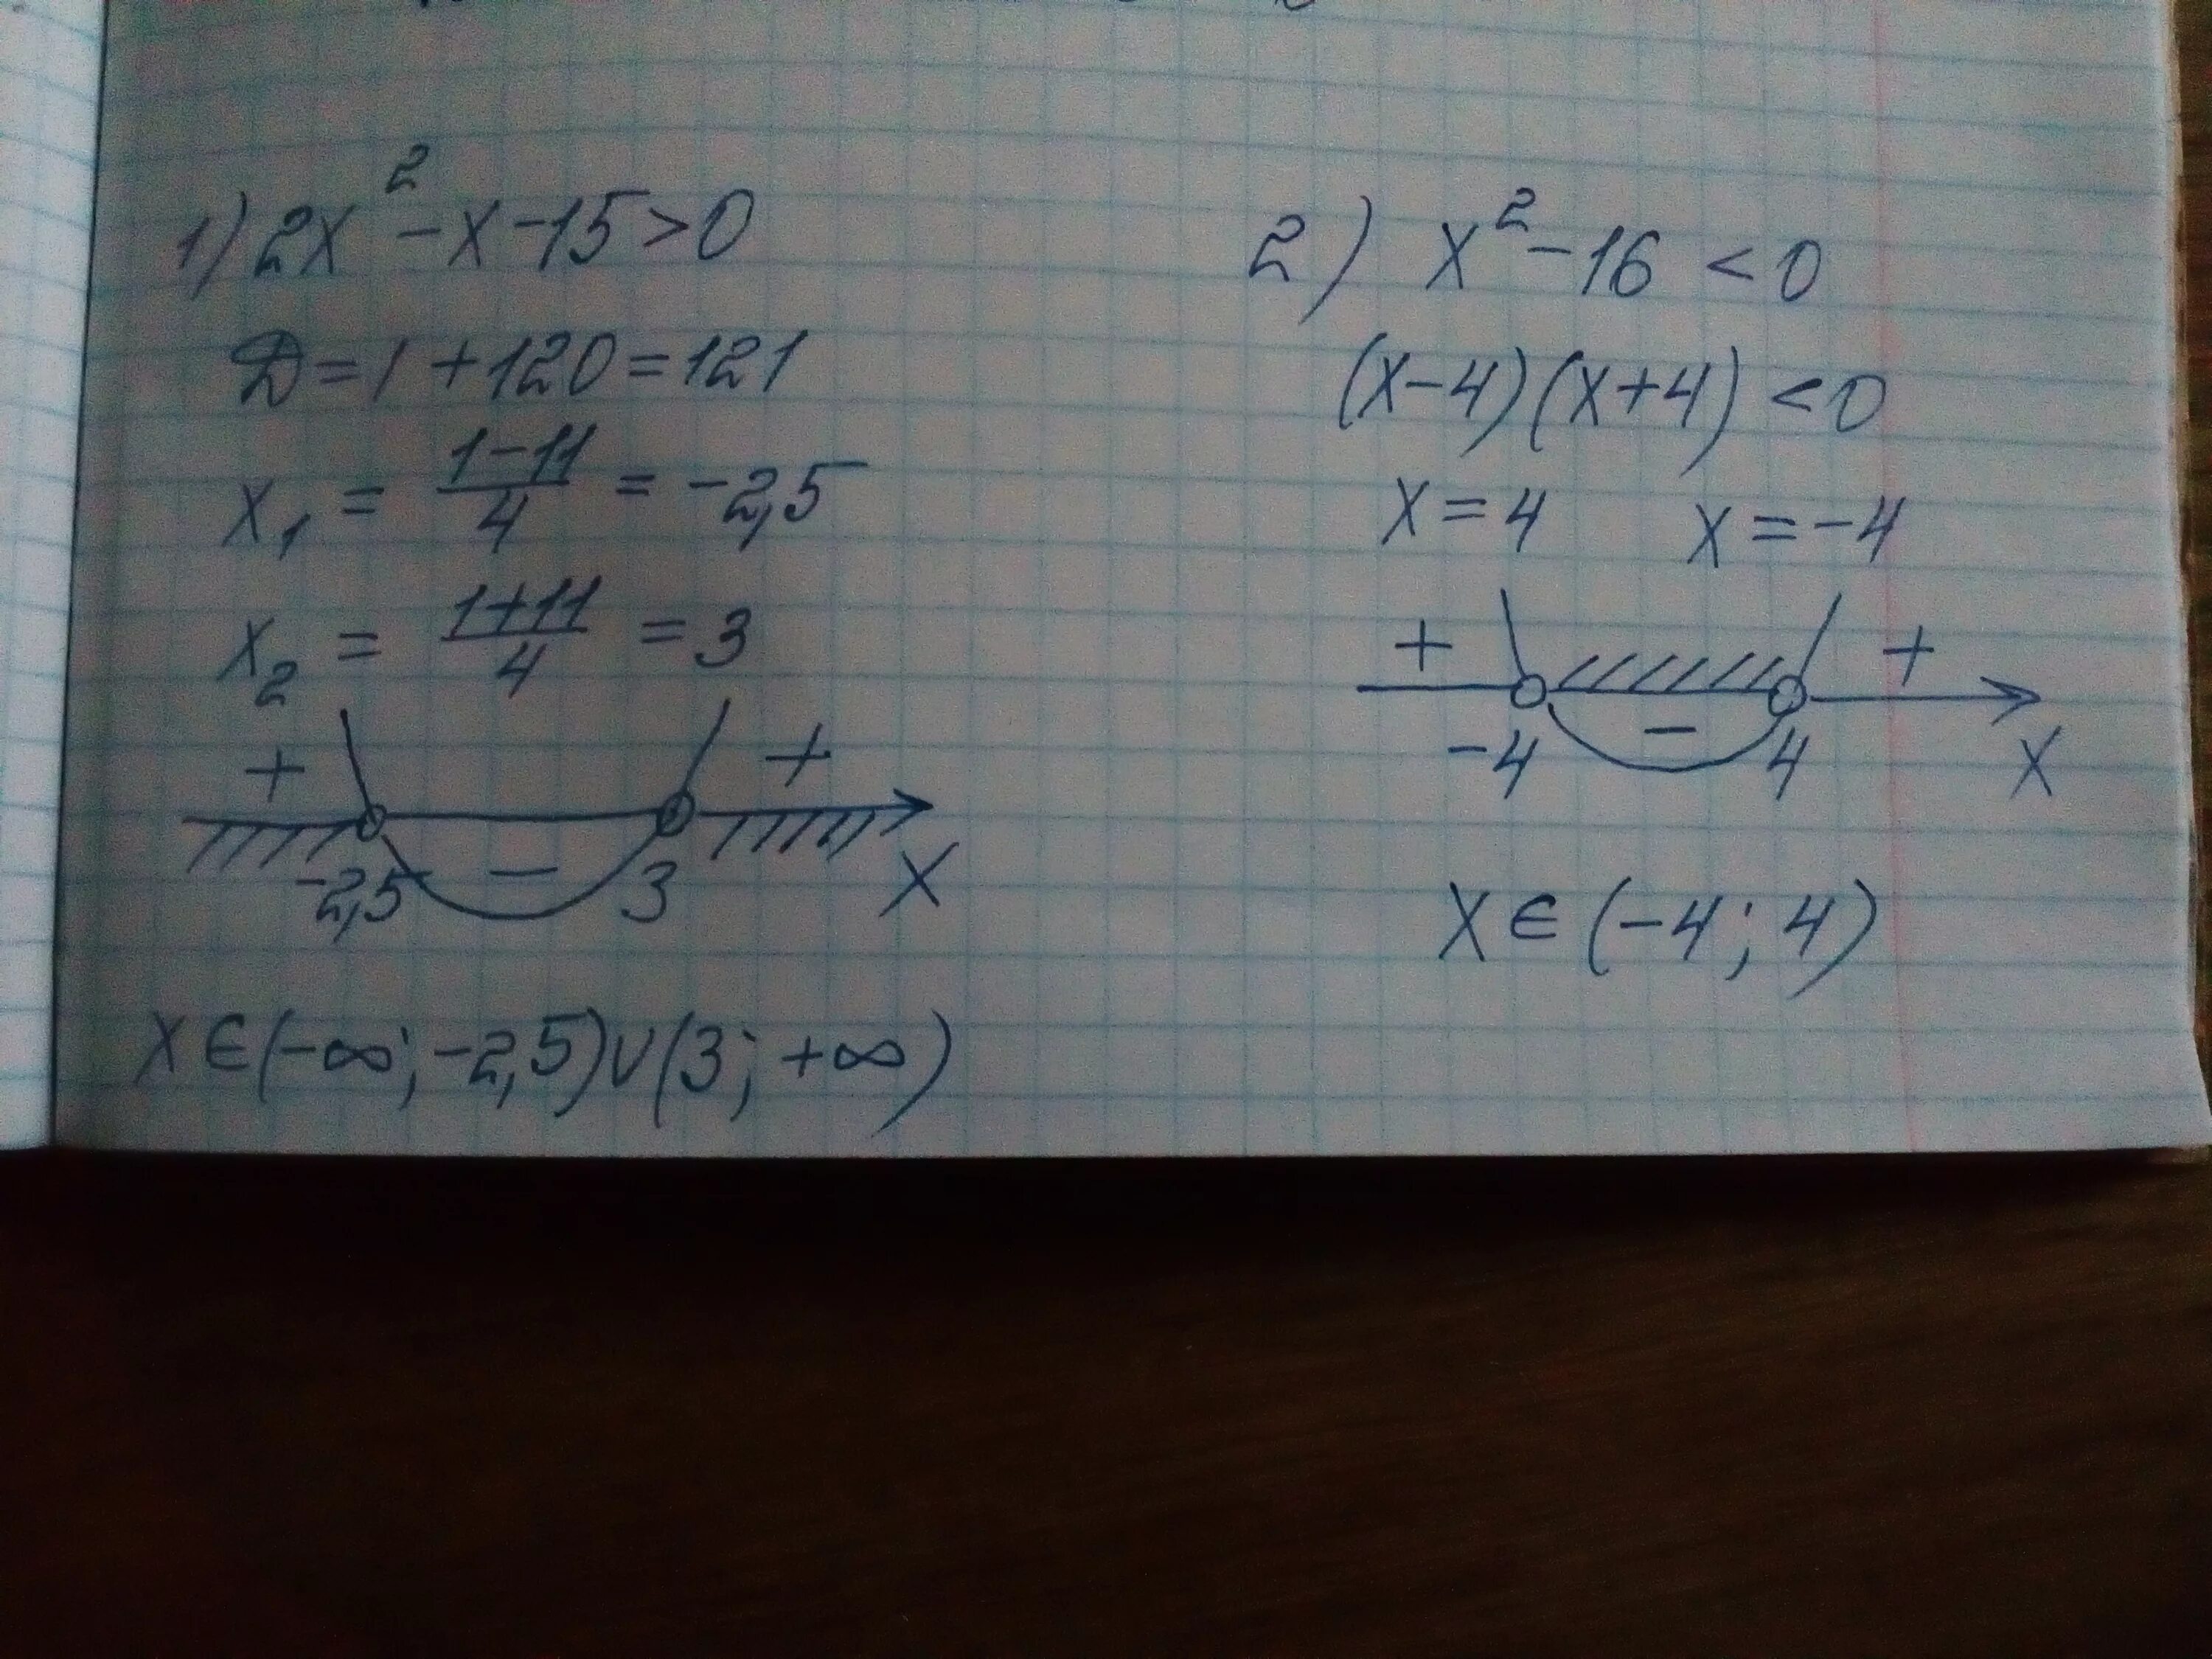 X2-15=2x. X2-2x-15=0. X X + = 2 15.. X2+15x>0. 8x 15 25